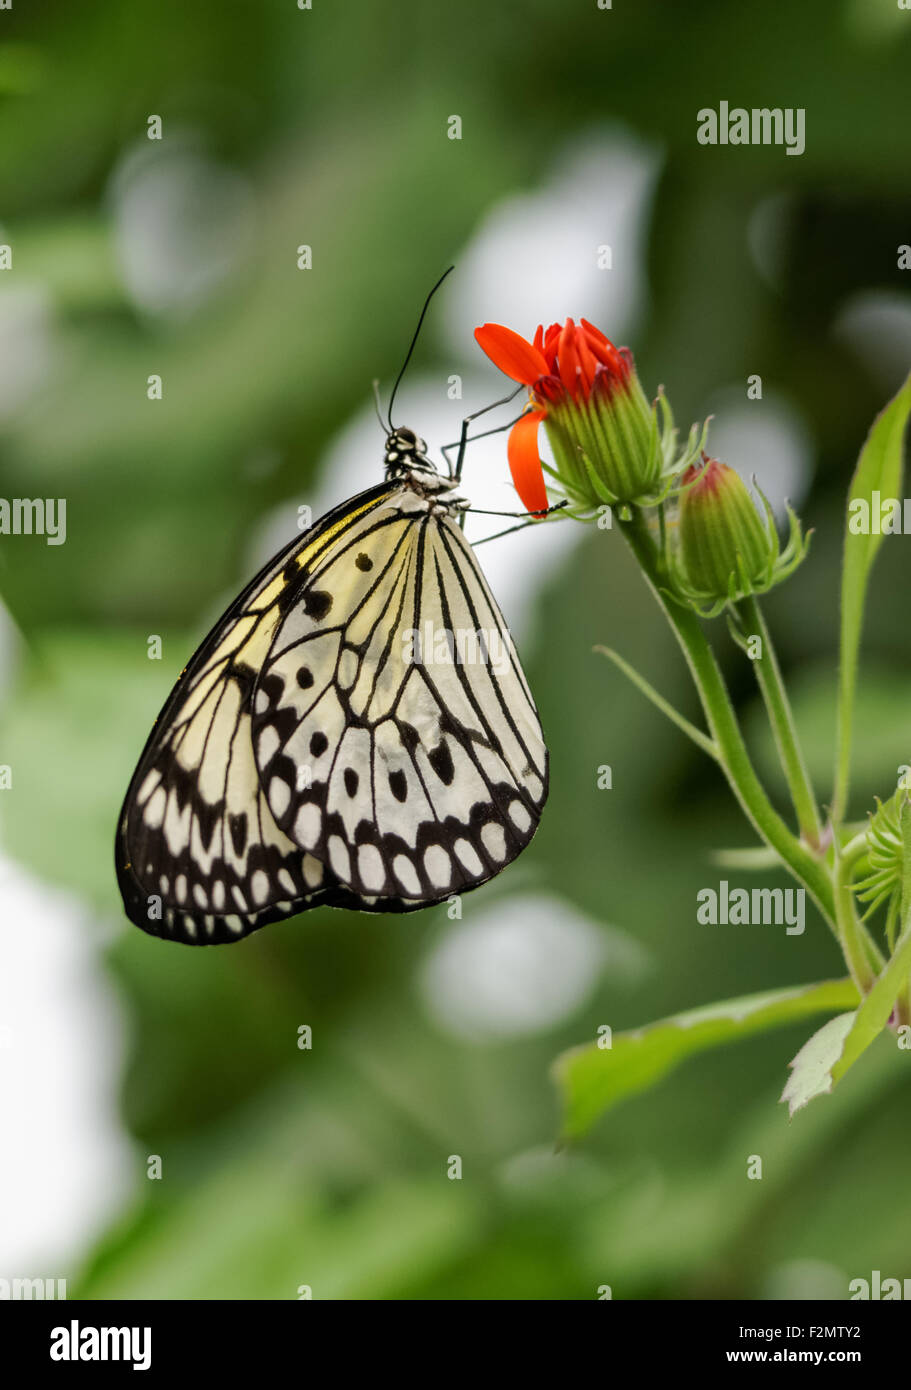 Malabar tree nymph butterfly, Idea malabarica Stock Photo